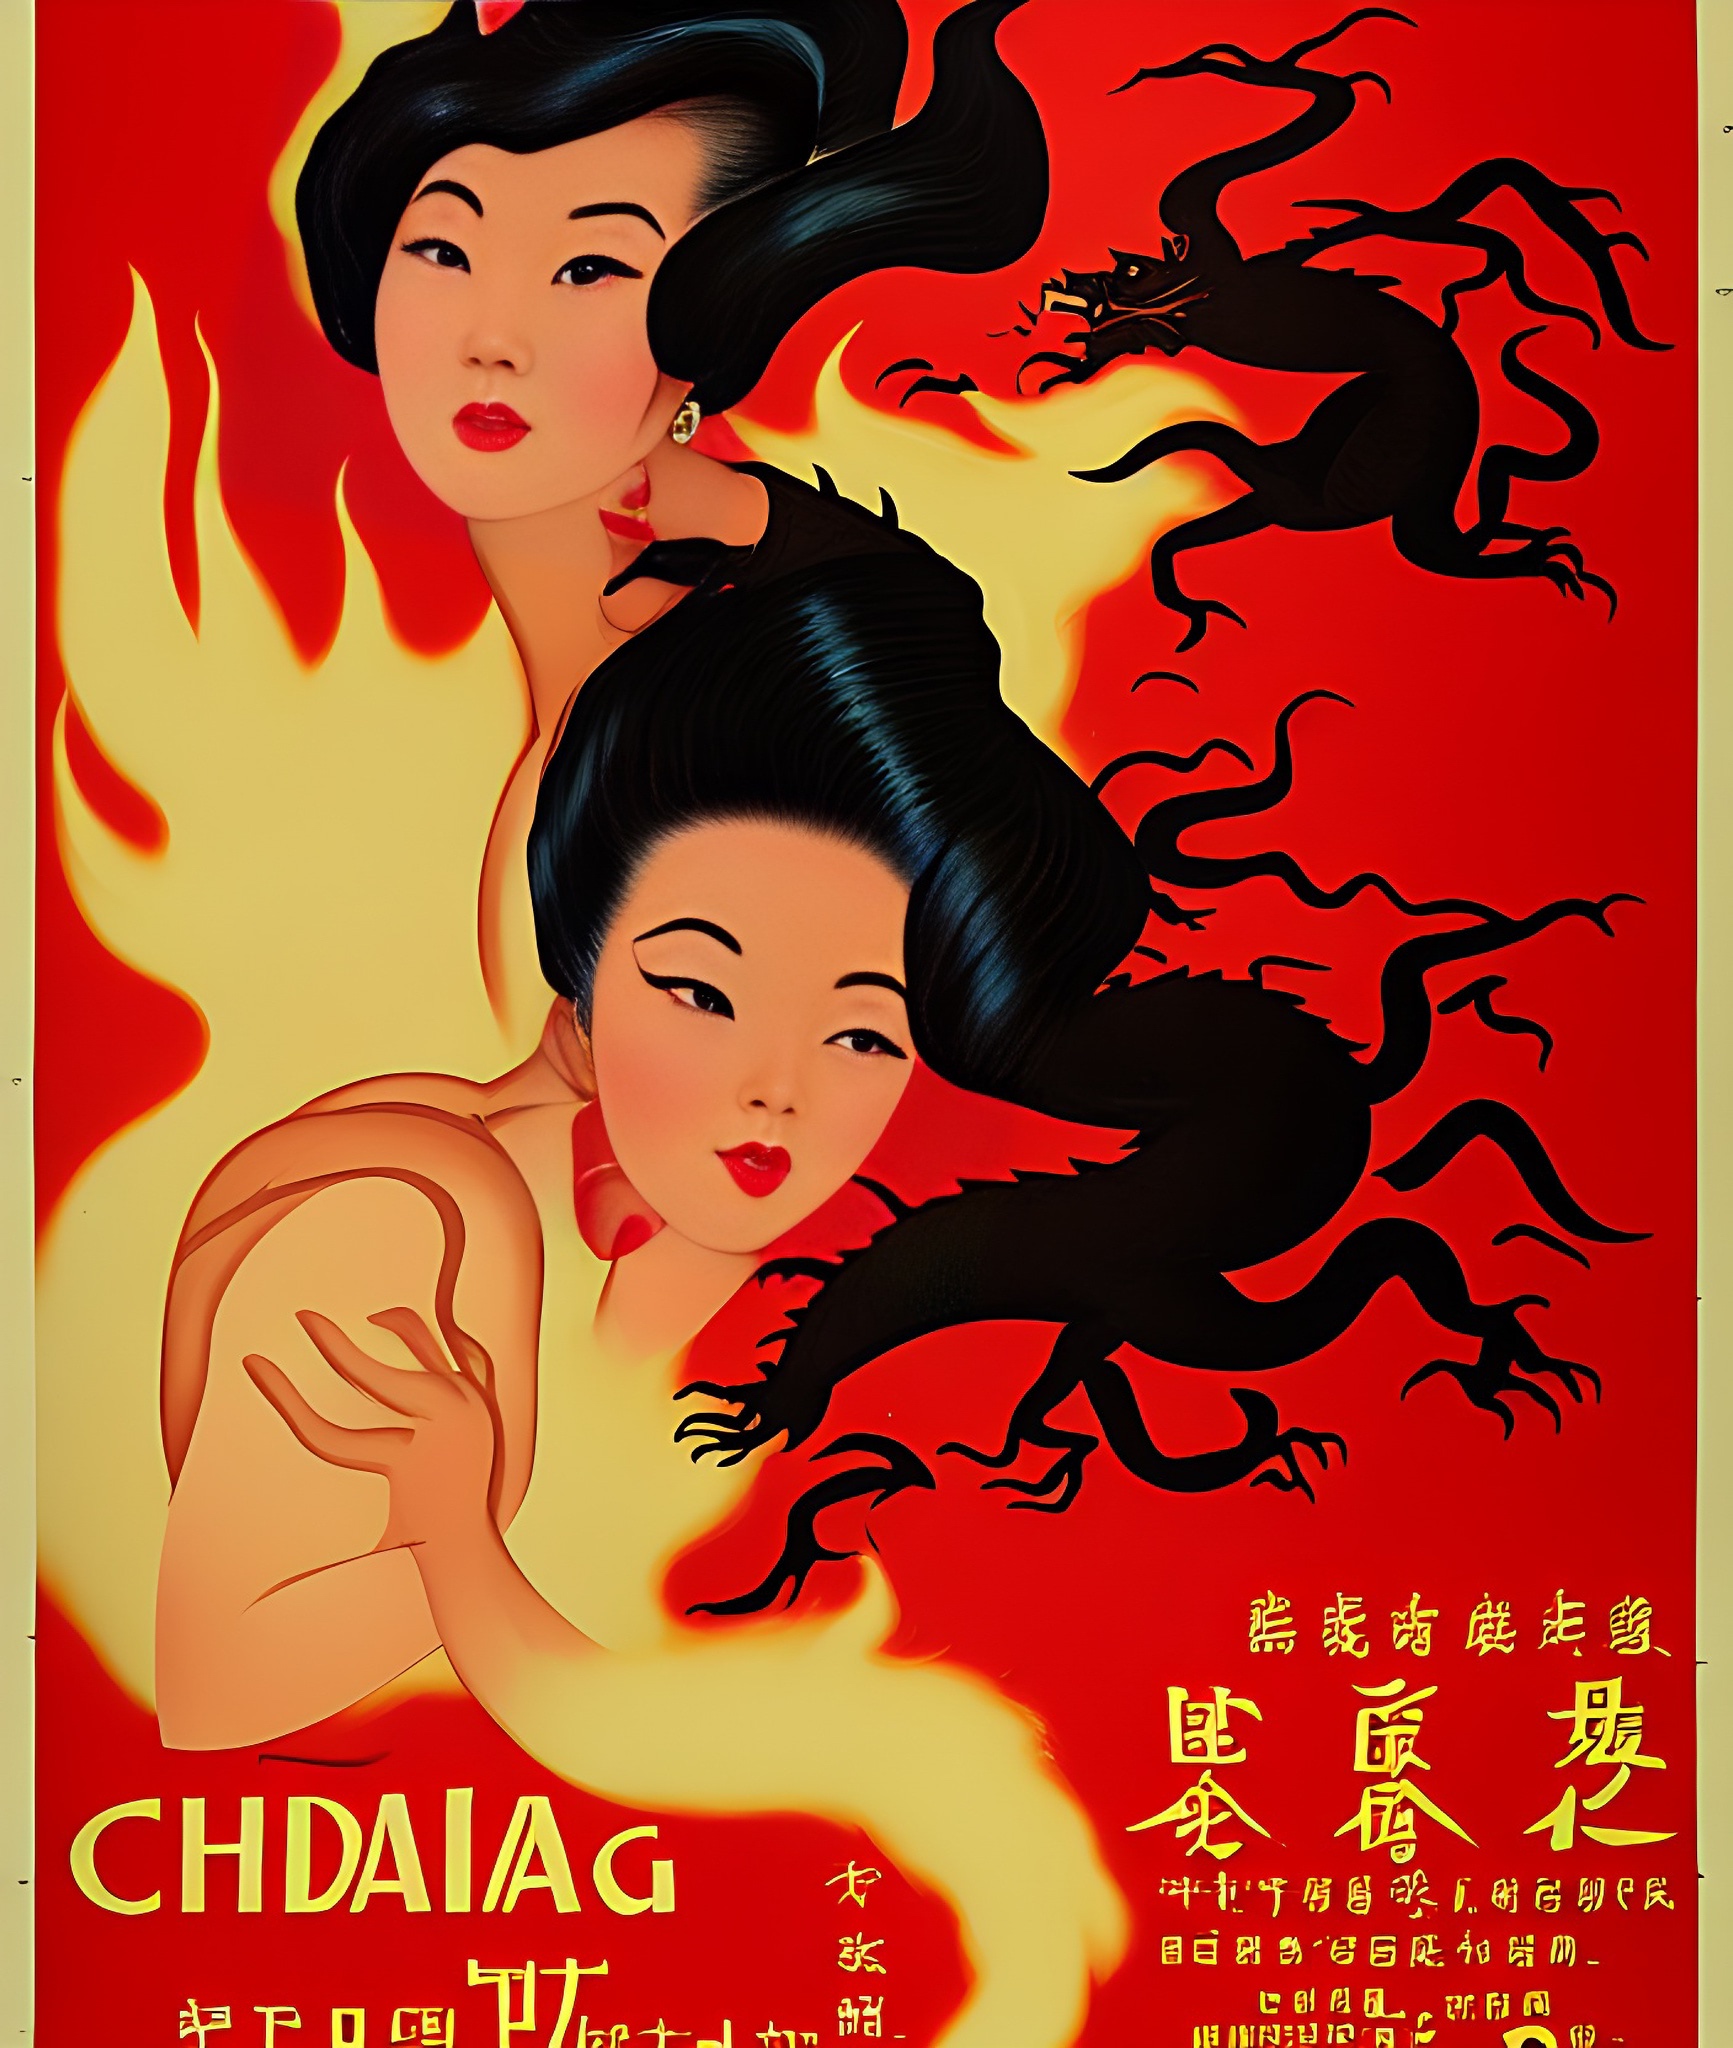 dragon-fire-woman-poster-design-vintage-2